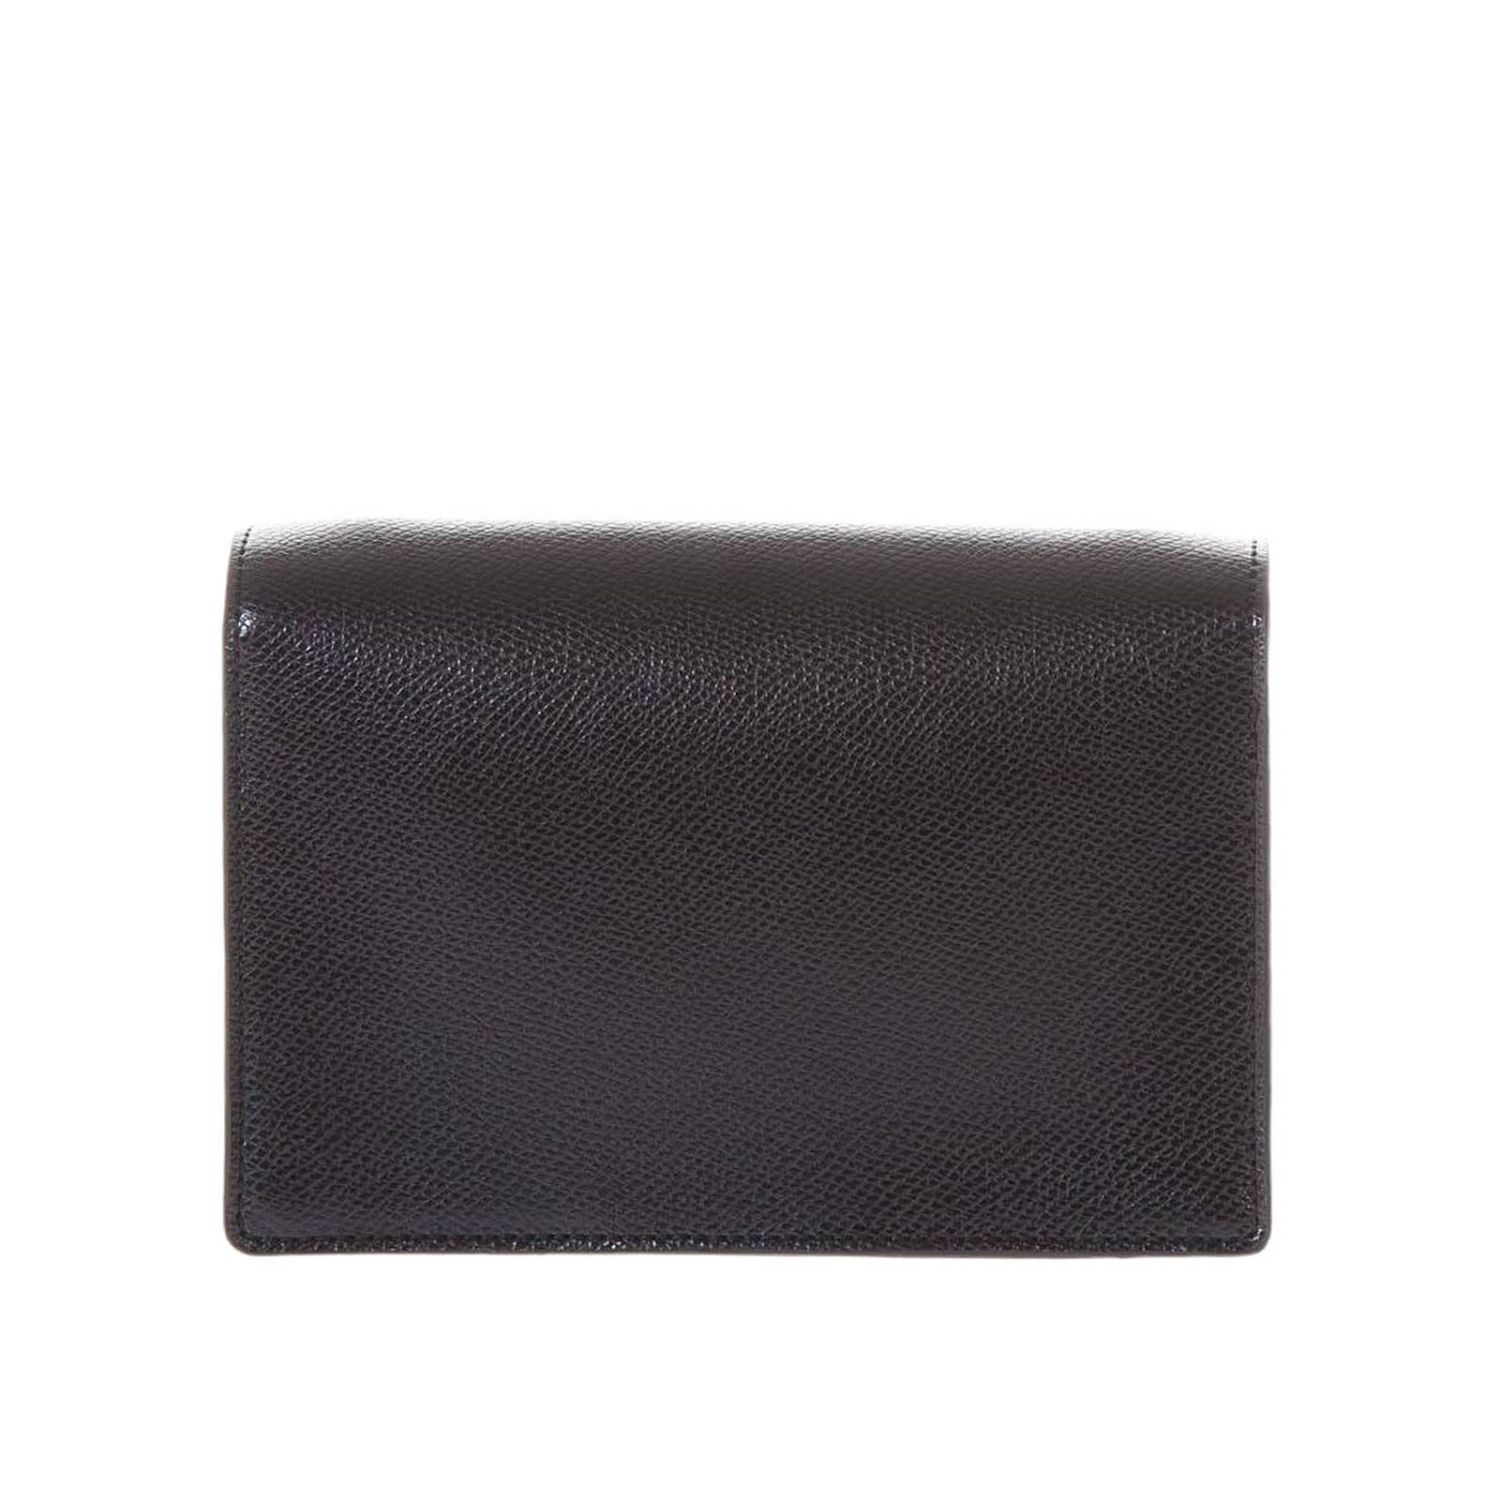 Emporio Armani Outlet: Shoulder bag women - Black | Mini Bag Emporio ...